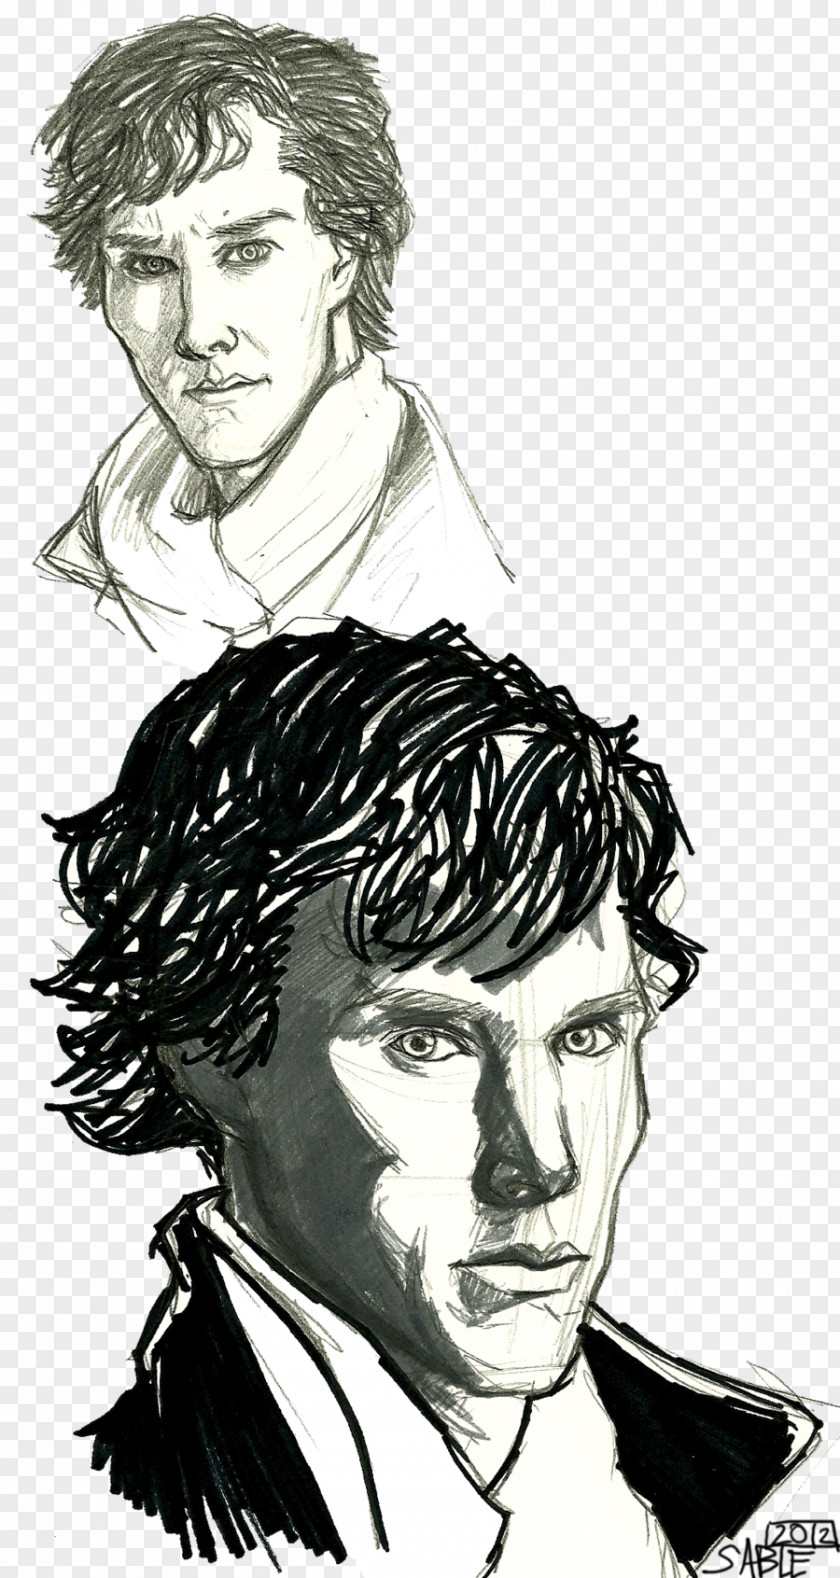 Benedict Cumberbatch Comics Artist Forehead Fiction Inker Sketch PNG